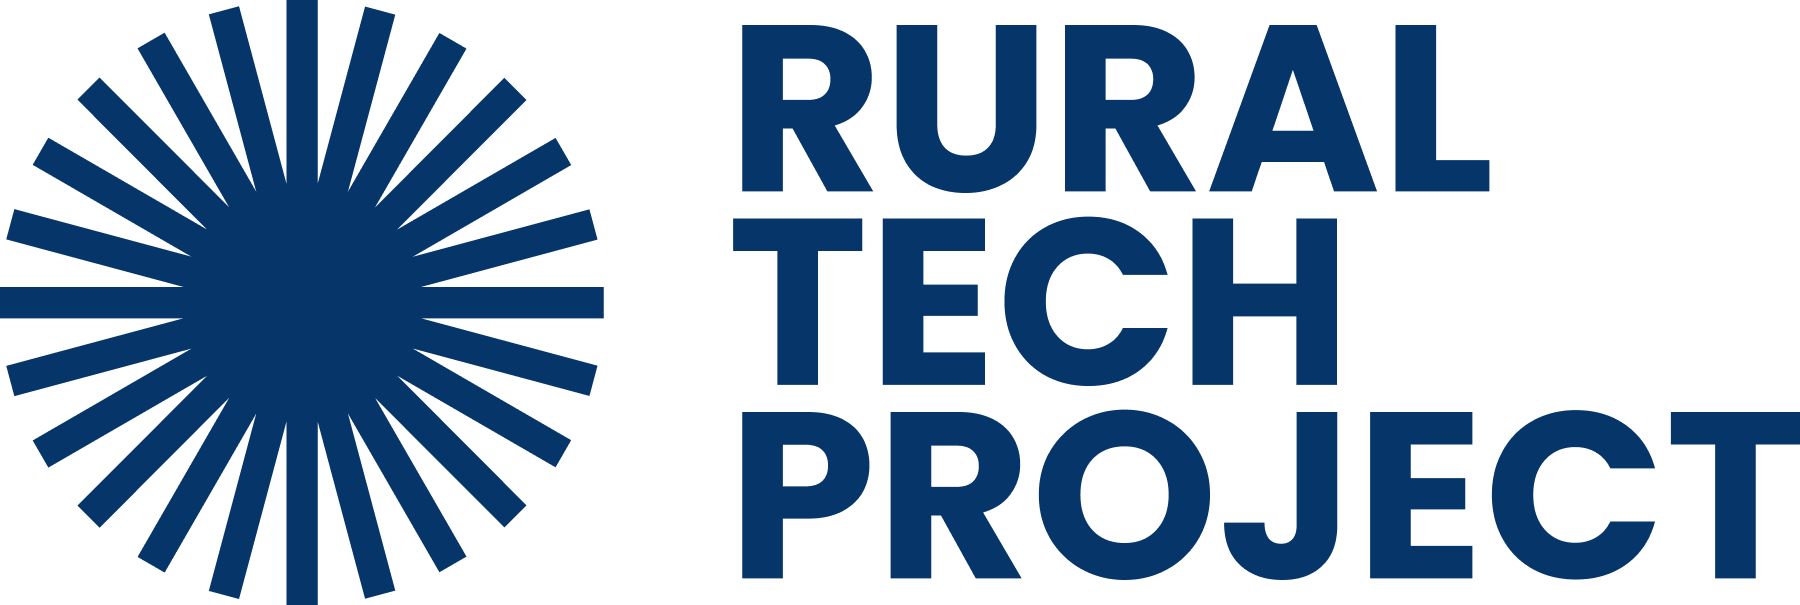 Rural Tech Project logo